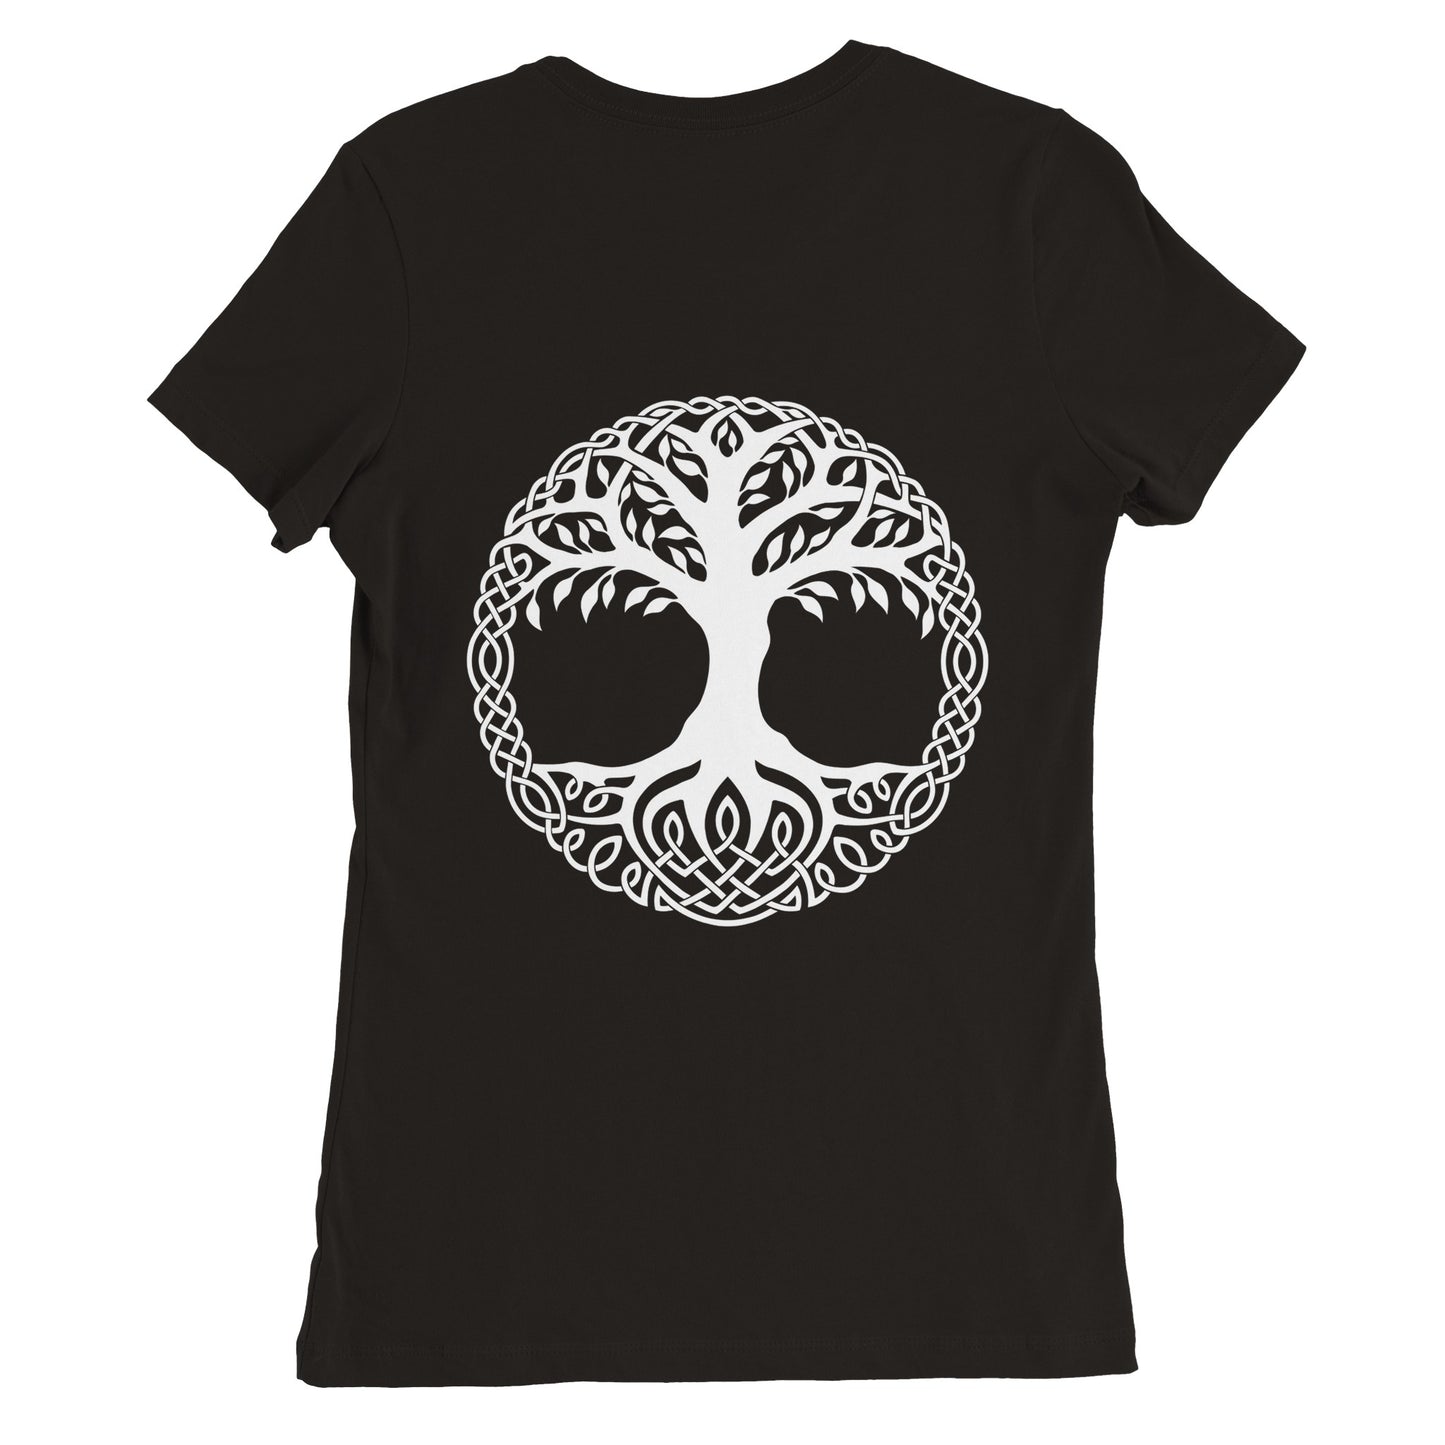 Yggdrasil, the tree of life Womens T-shirt